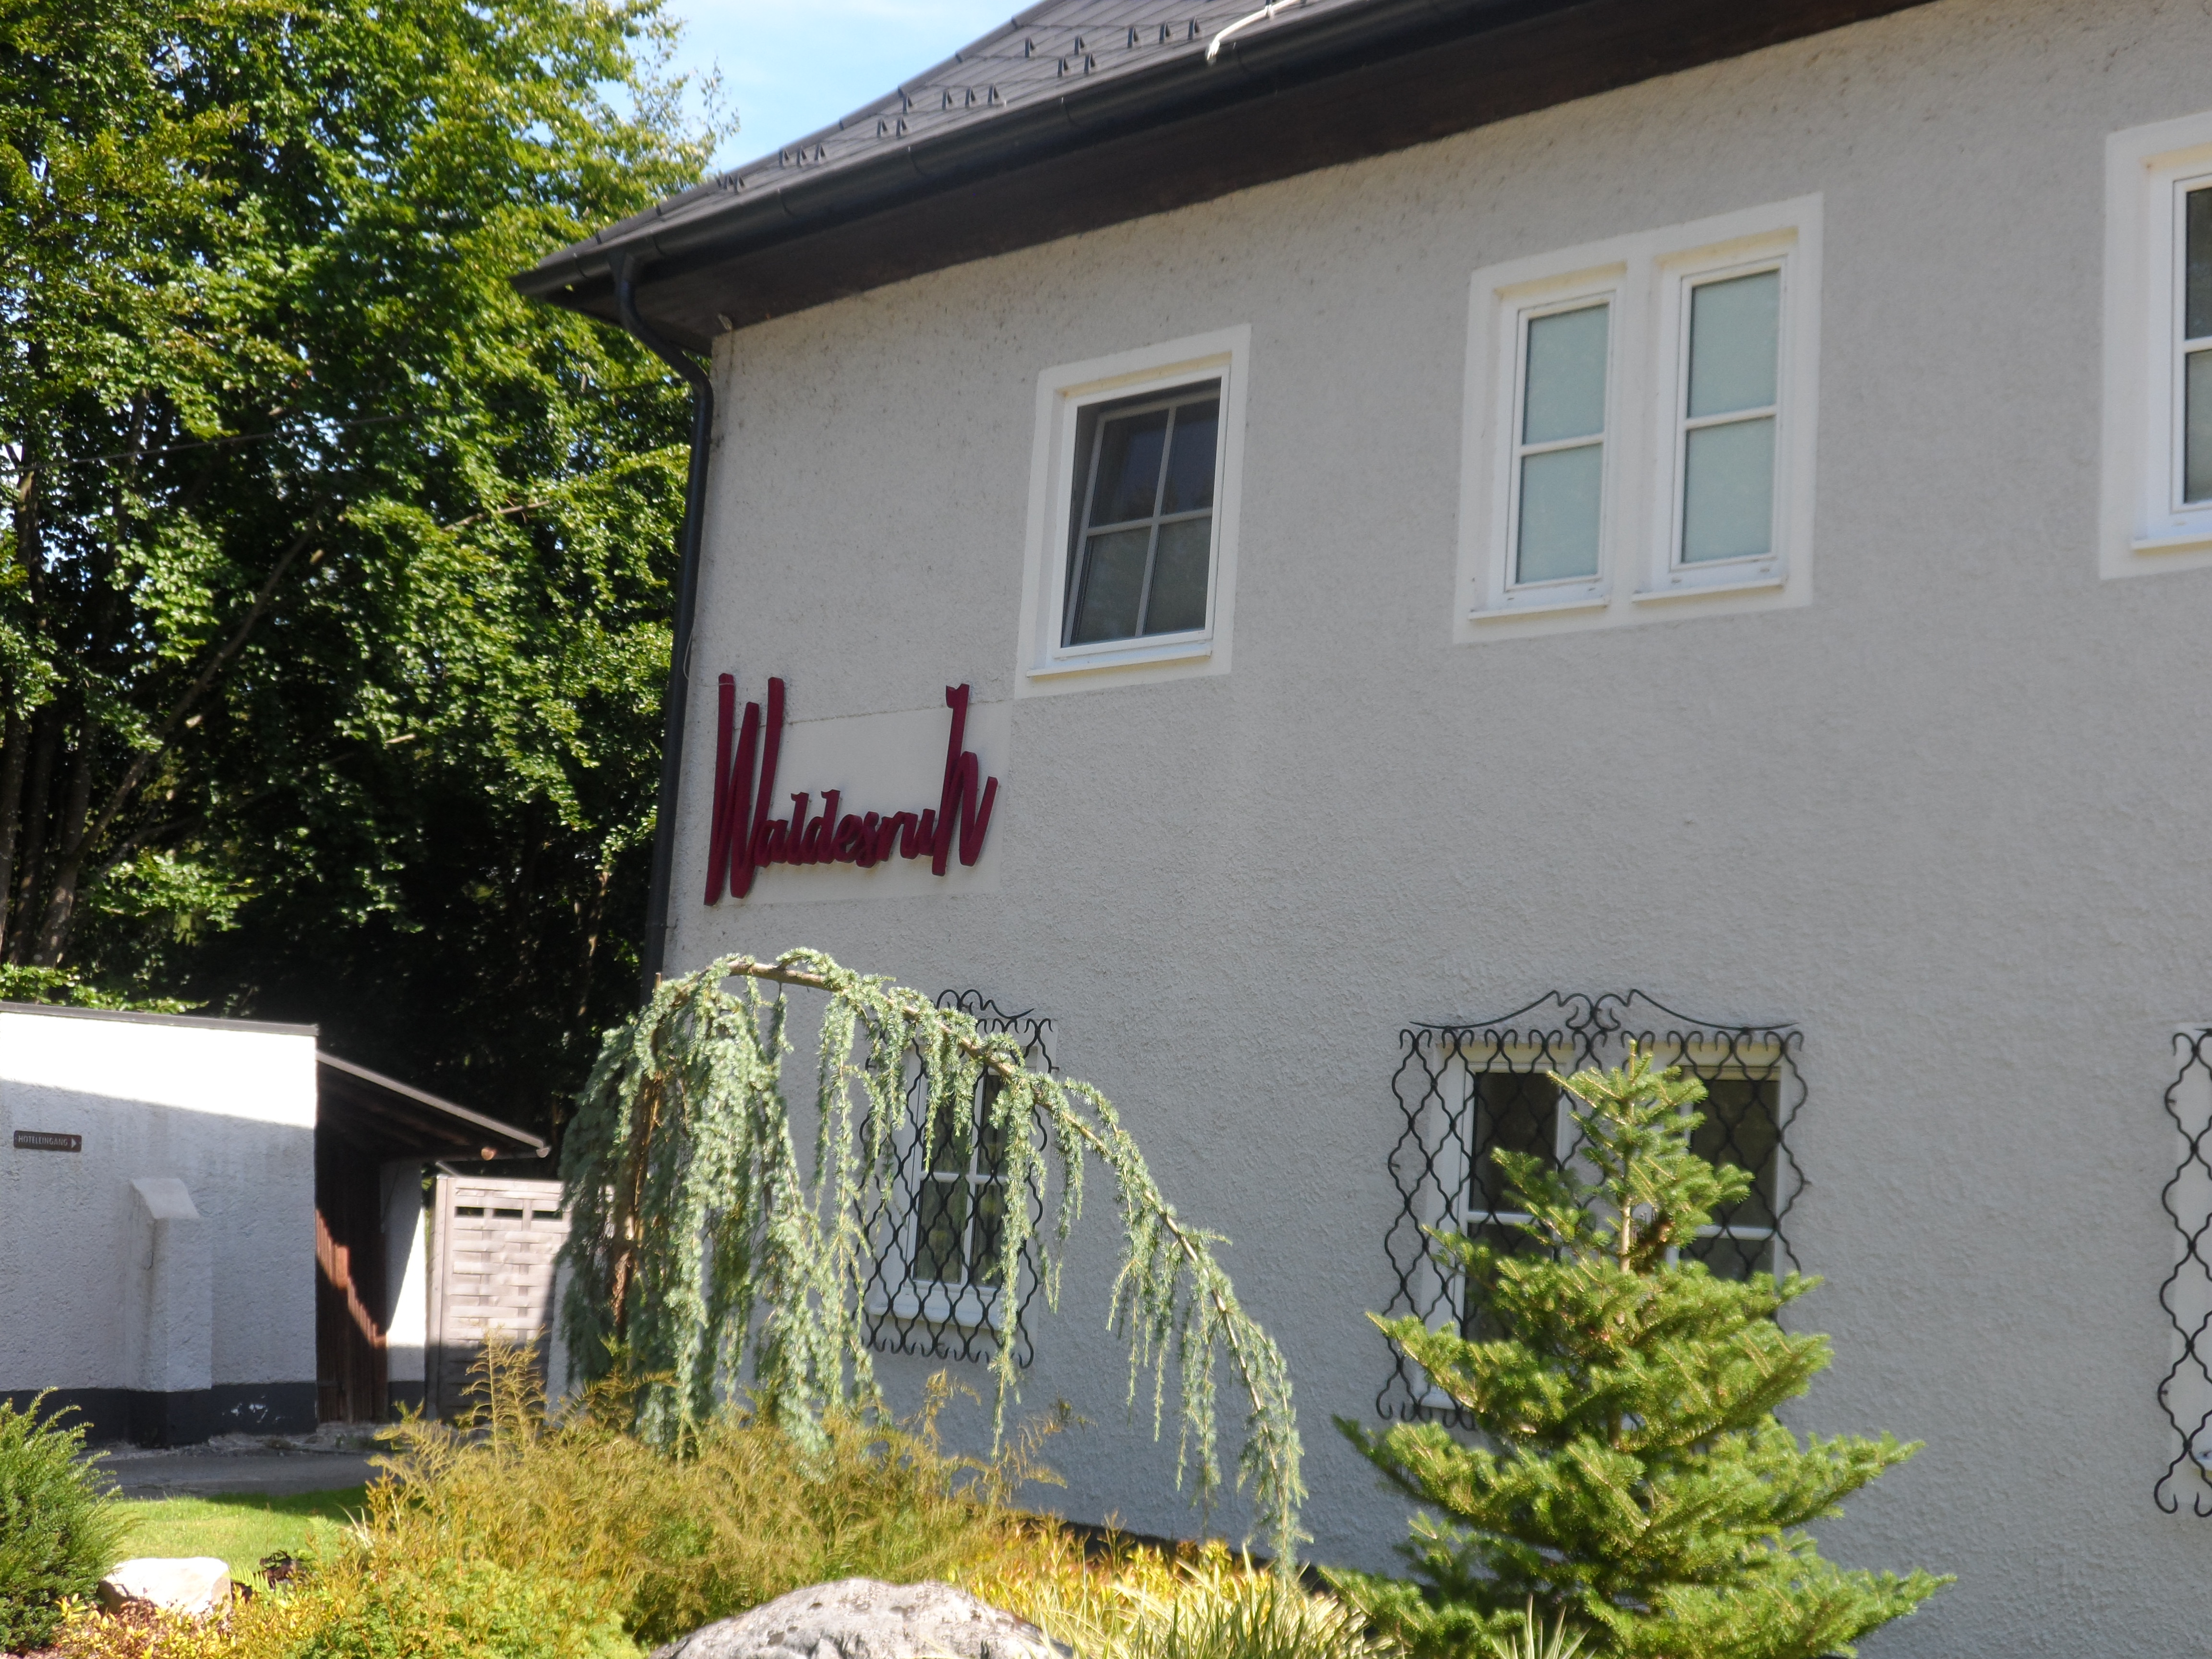 Restaurant & Hotel Waldesruh in Ohlsdorf